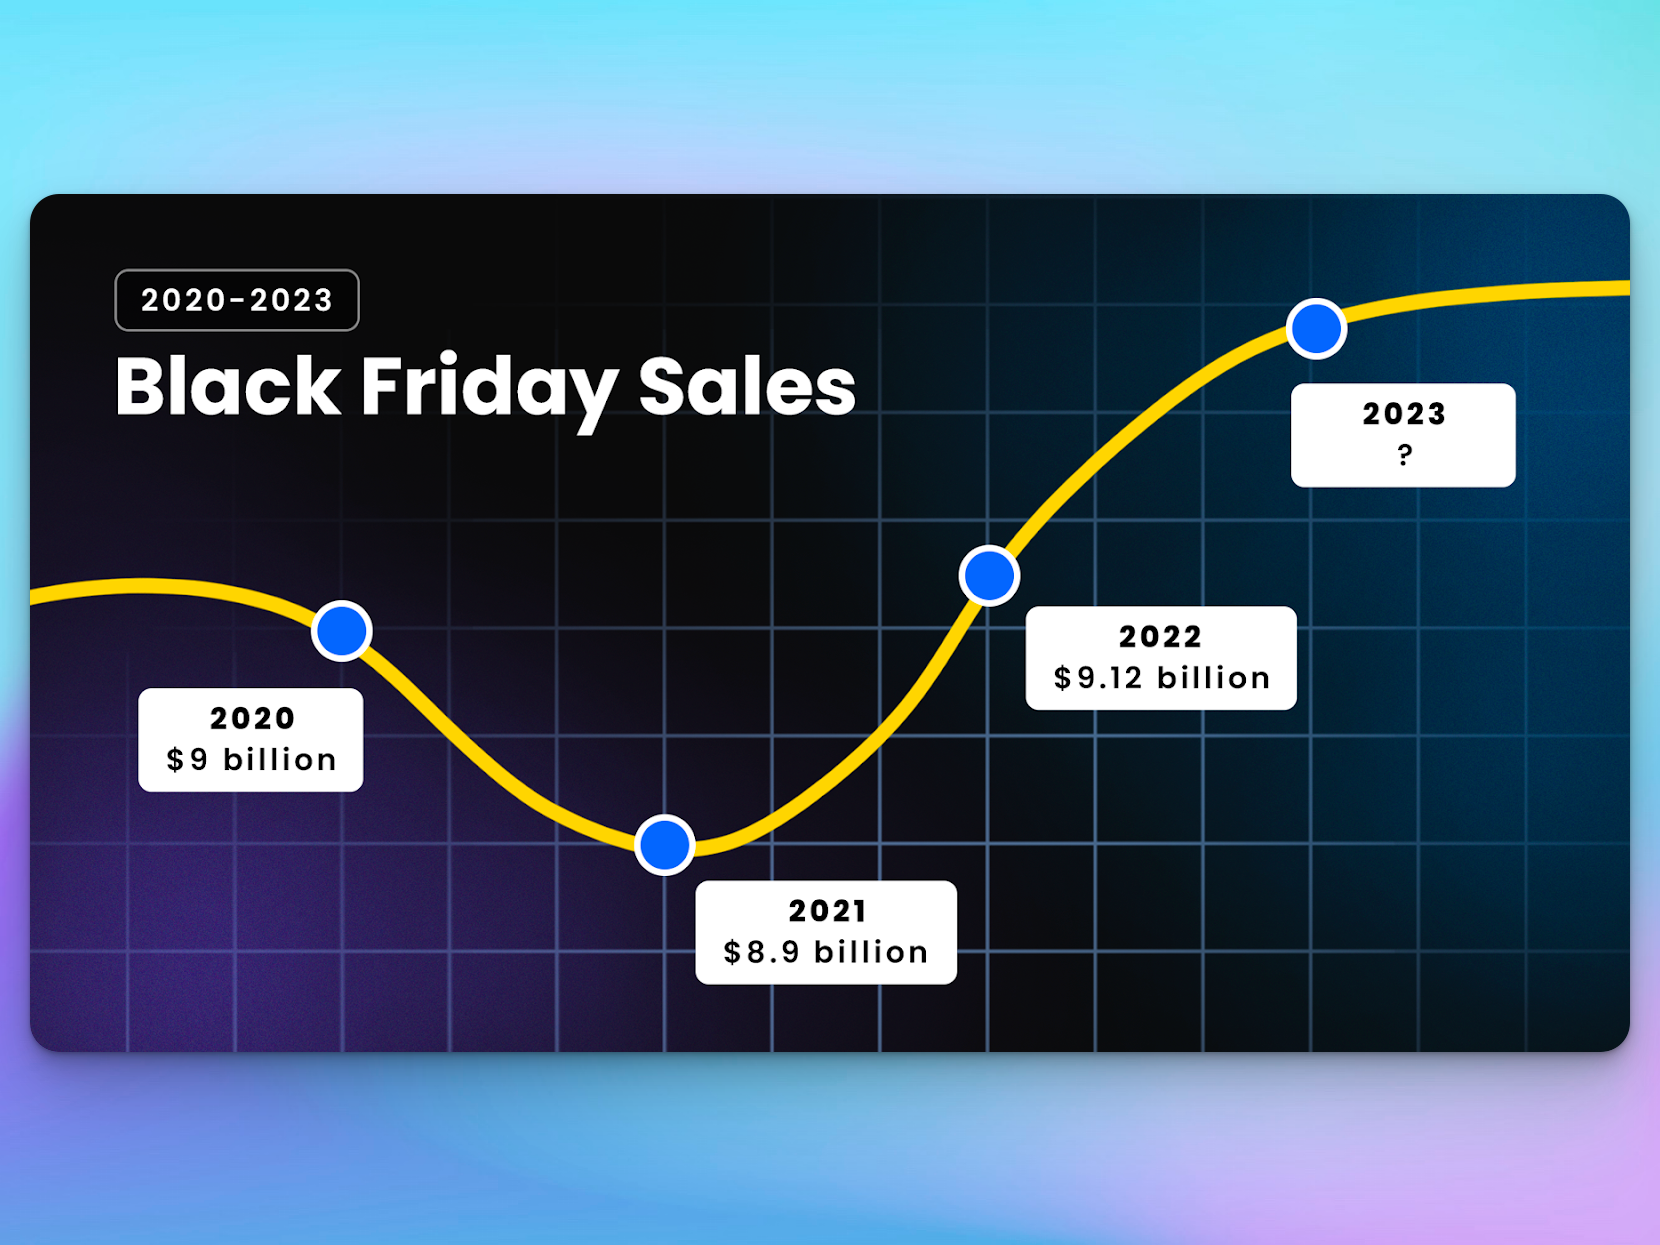 Black Friday sales (2020-2023)